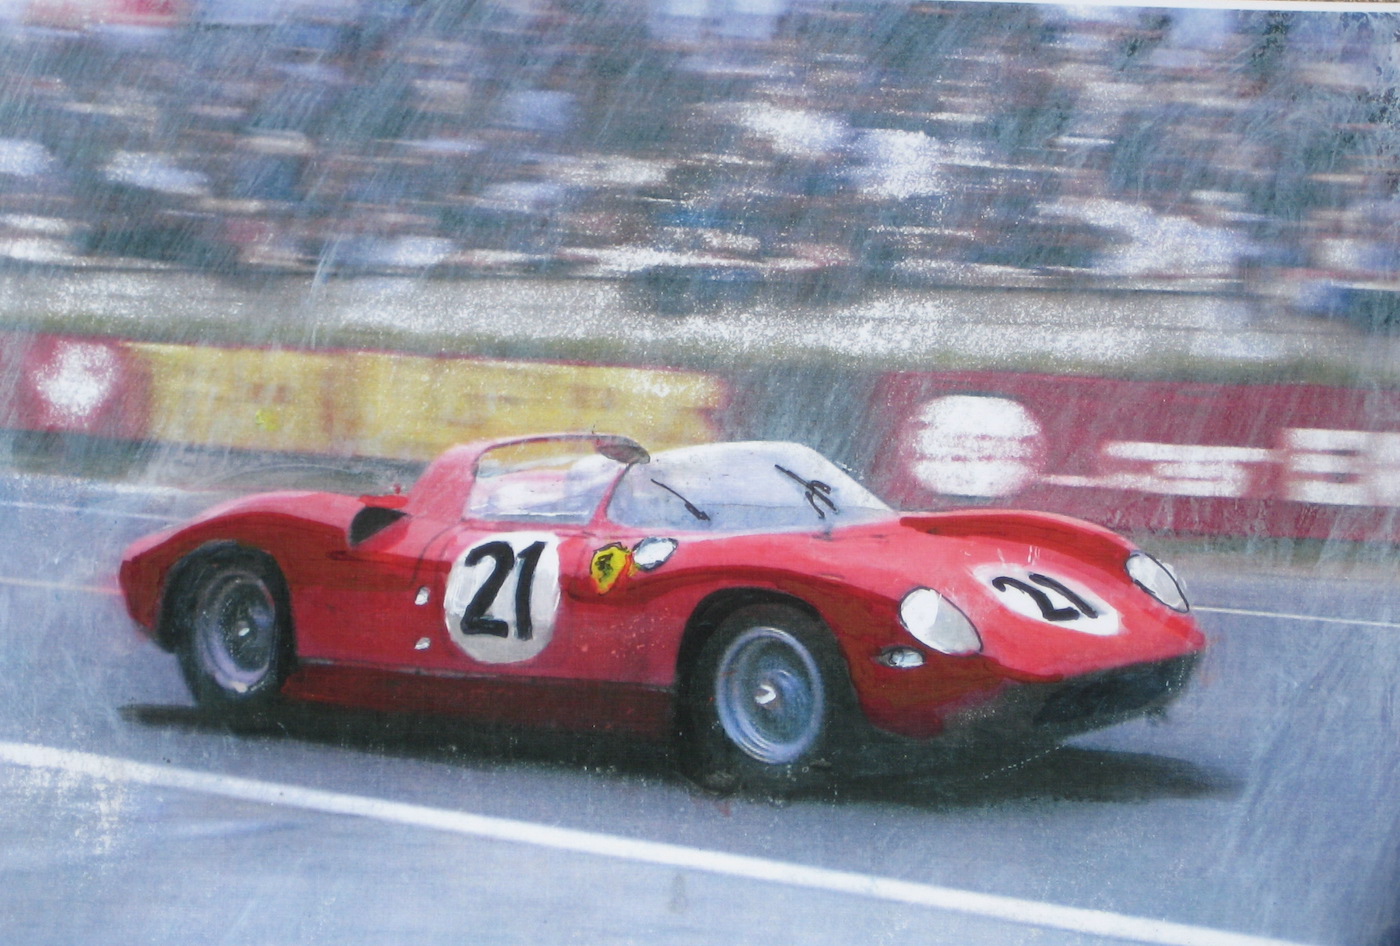 Classic Art On Wheels:  Remembering History - The 1963 Ferrari 250P